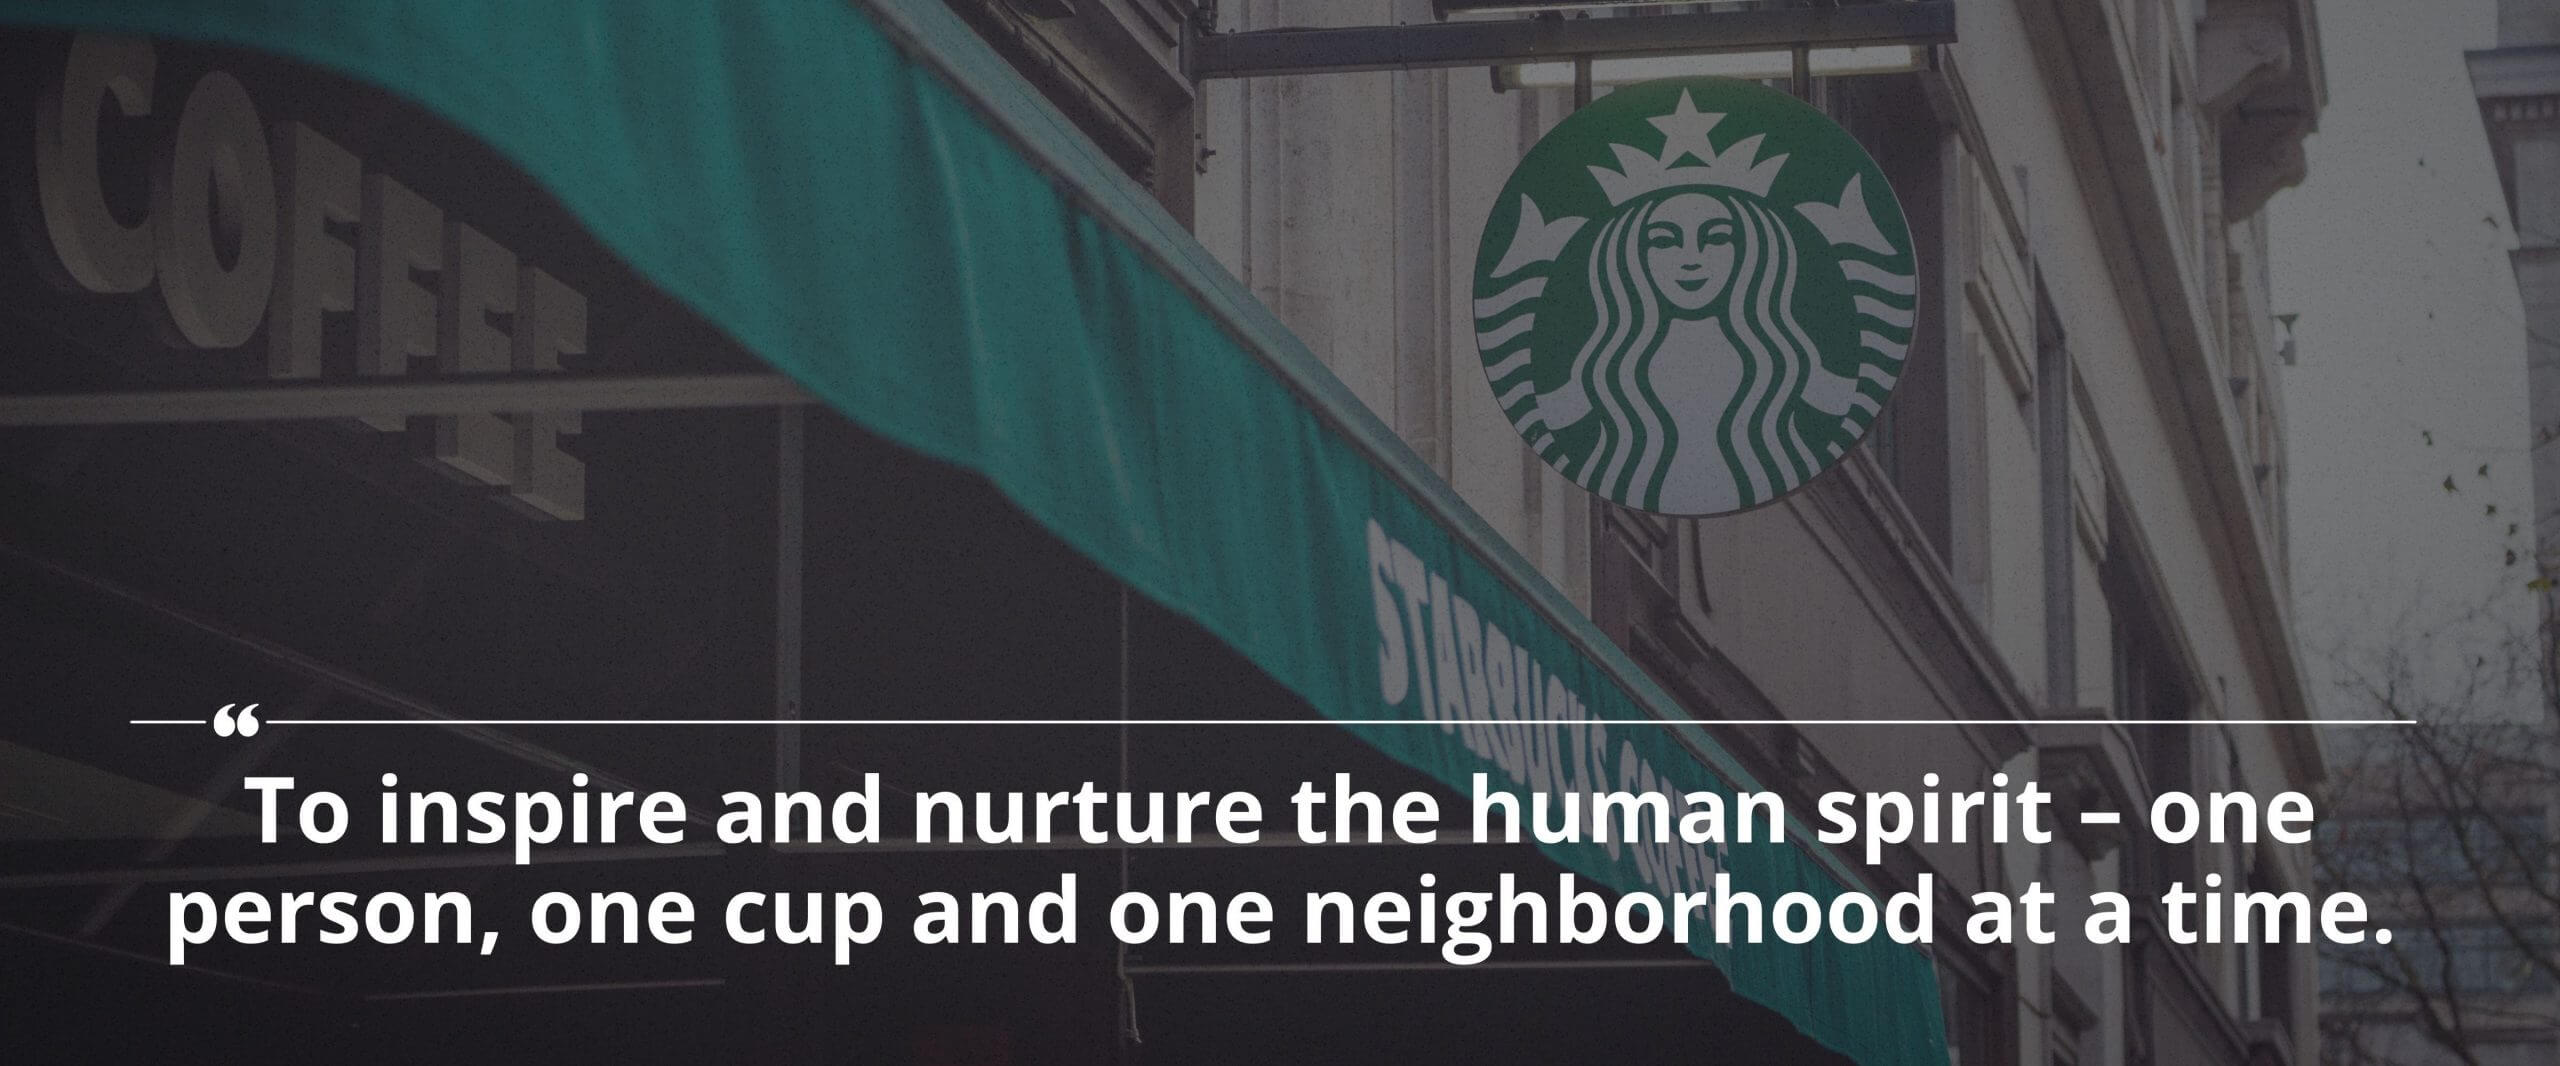 Starbucks Aktie Analyse – Das Frappuccino Imperium